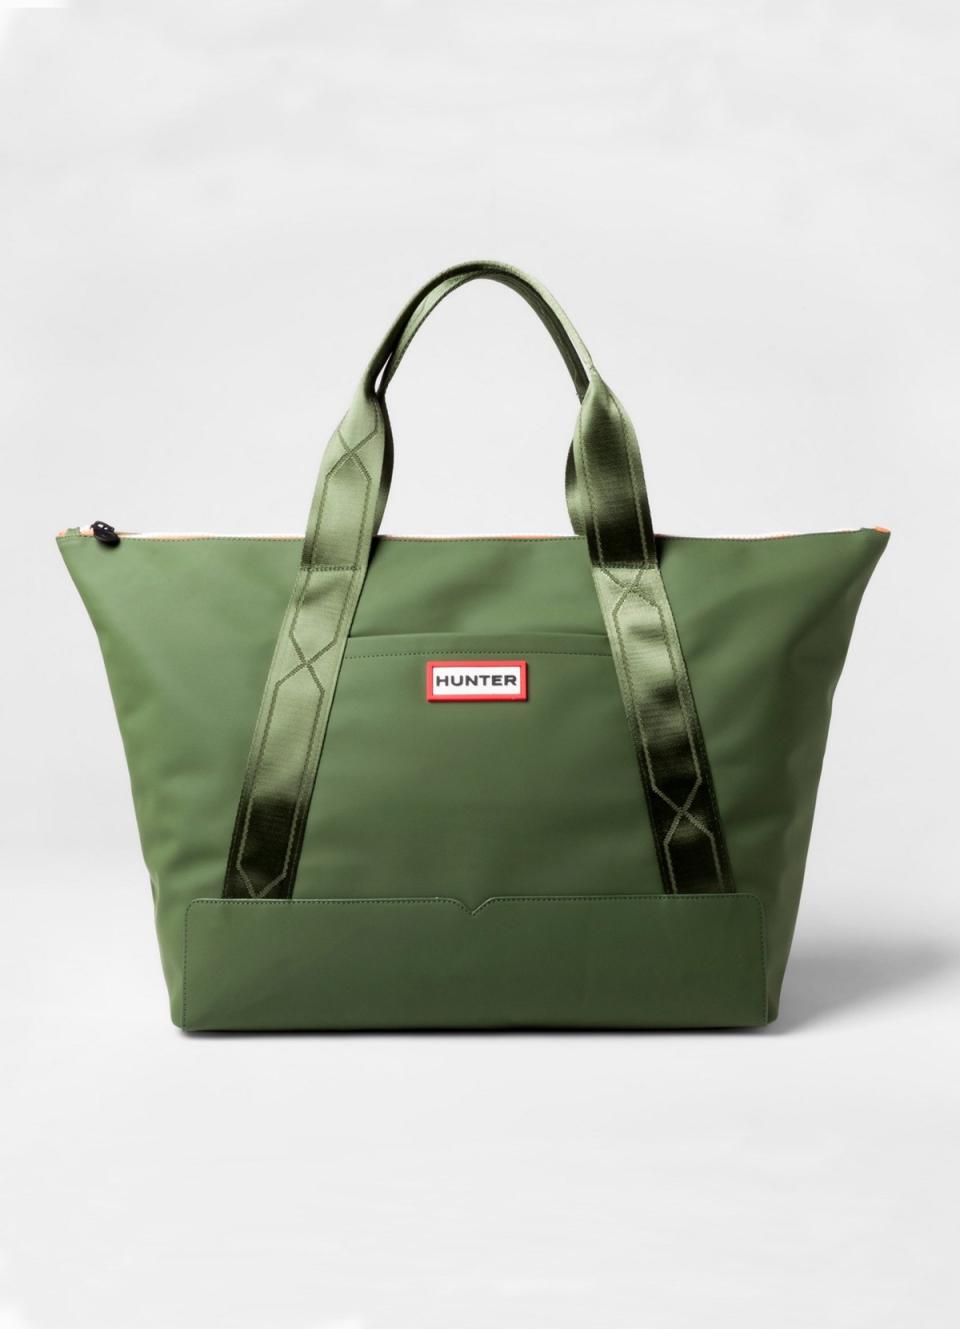 Hunter For Target Over-Sized Tote Bag, $35, Target